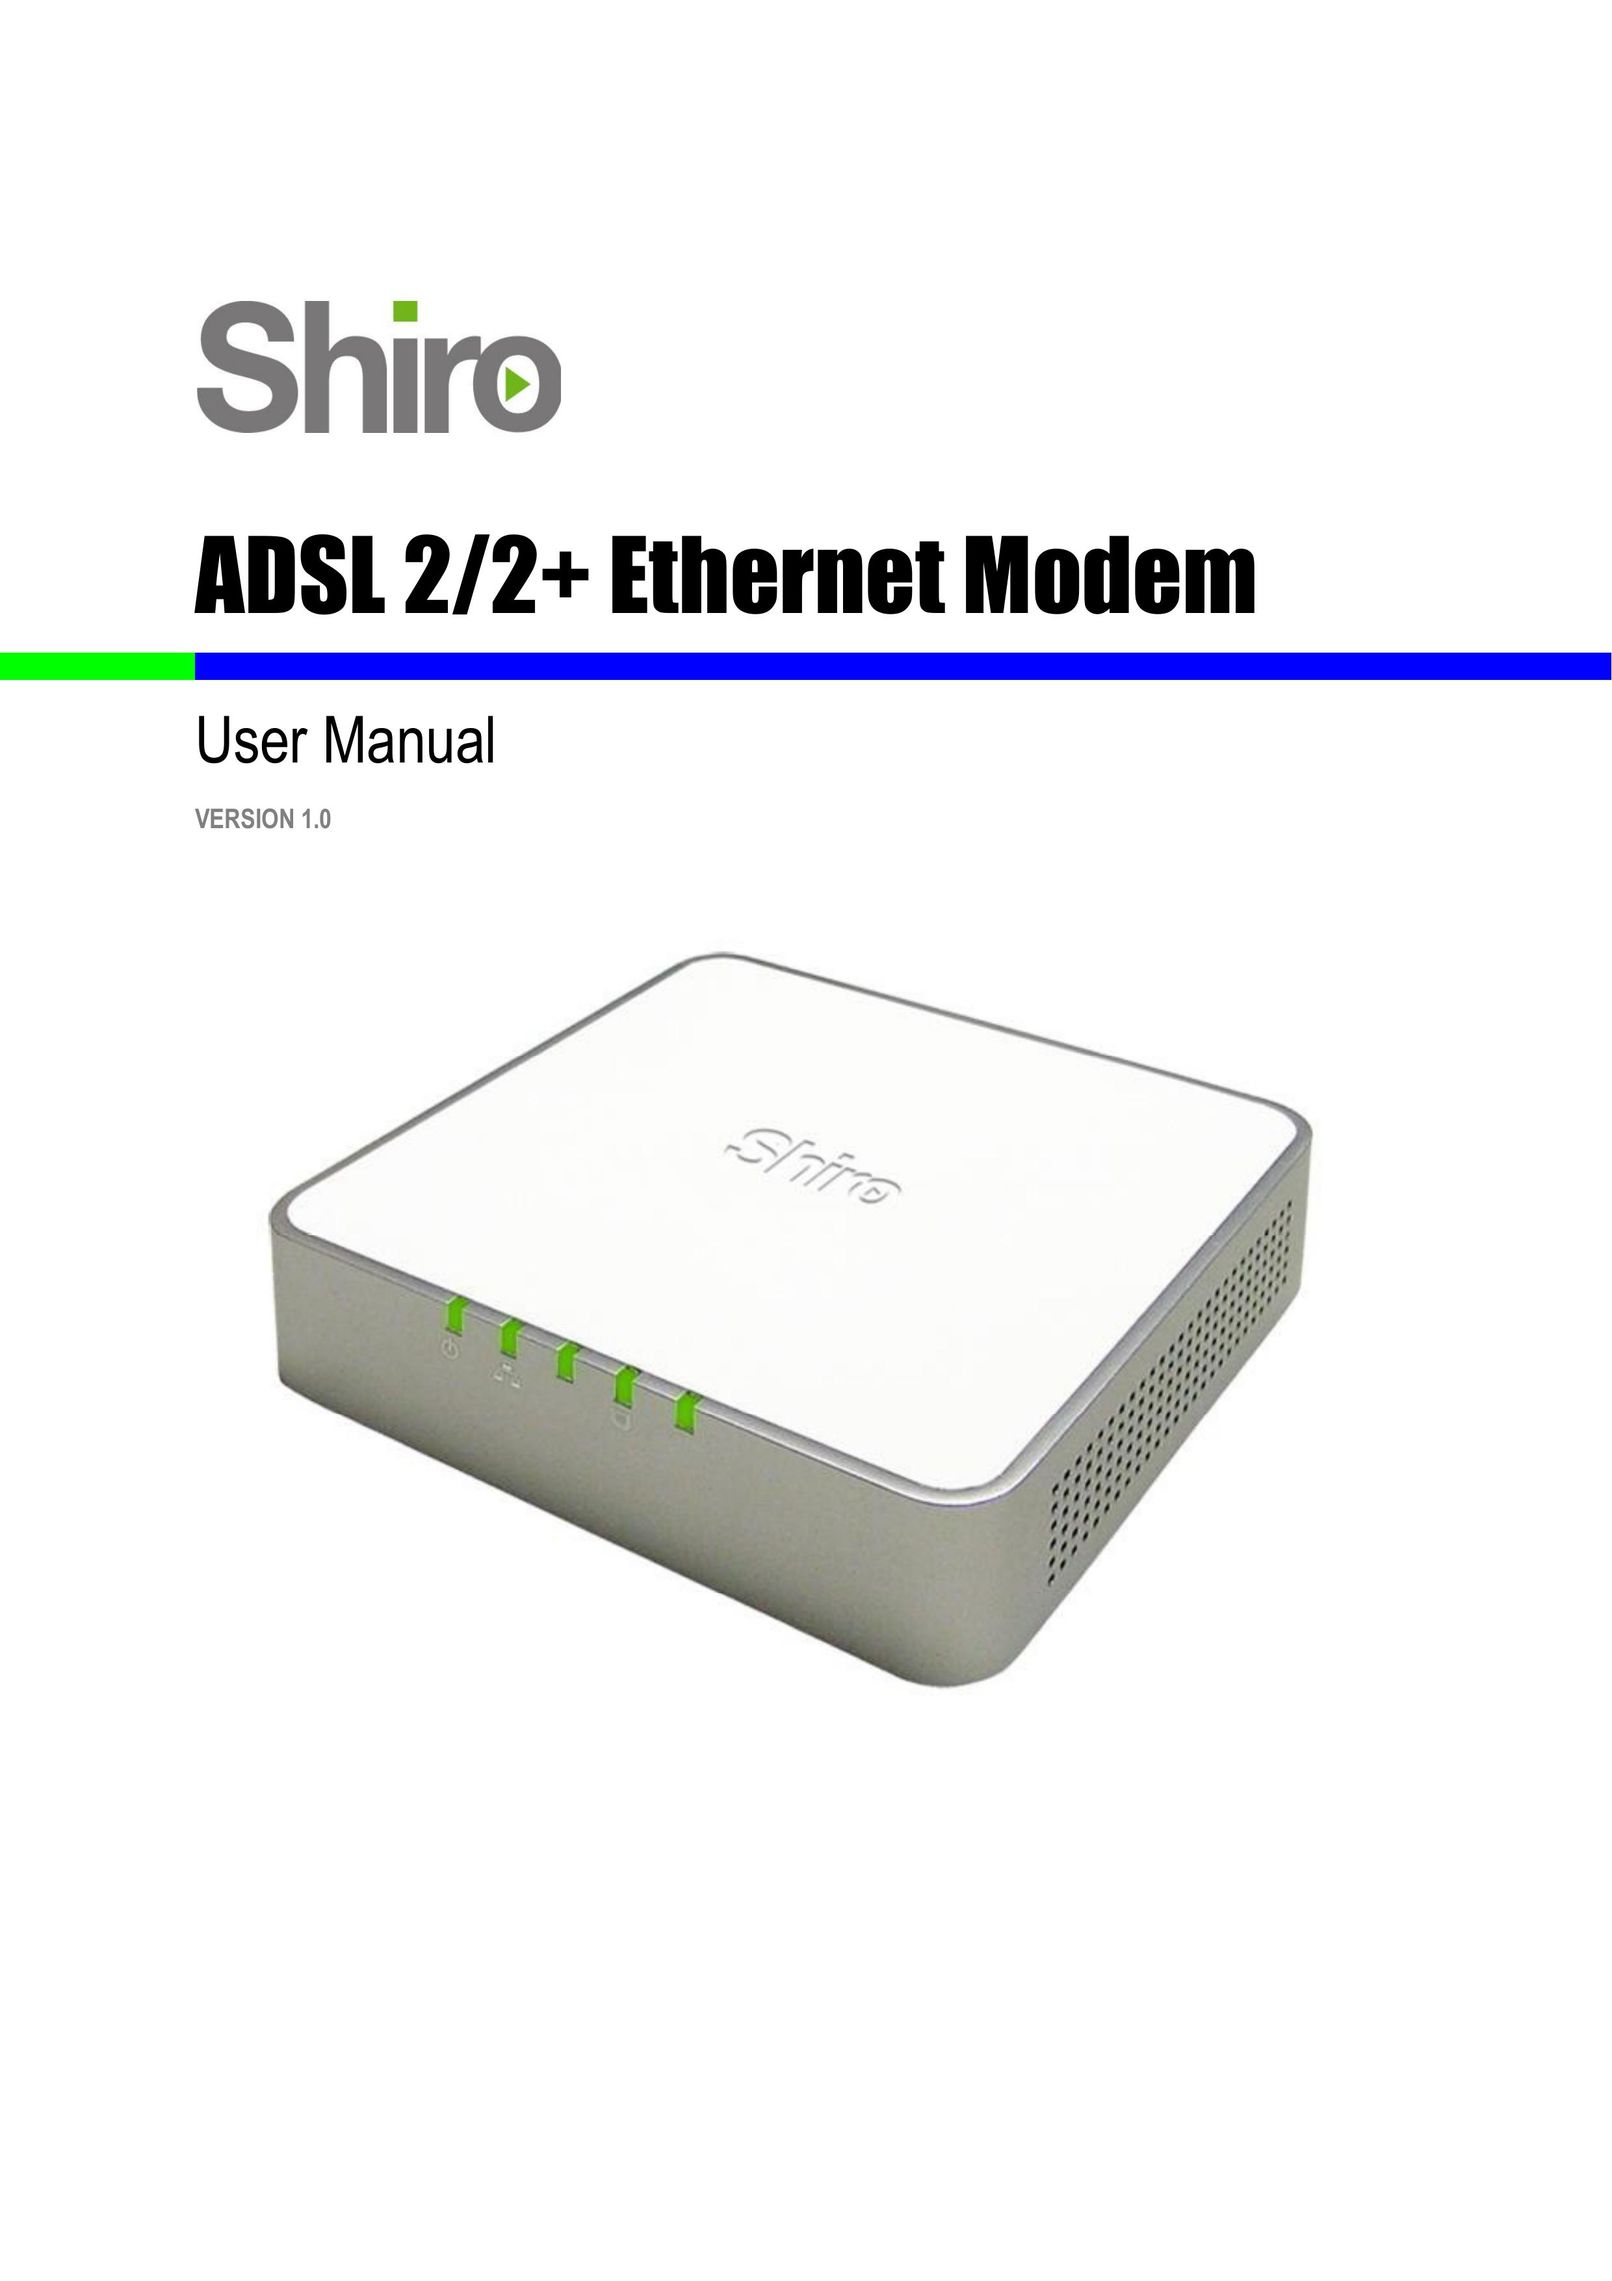 Shiro ADSL 2/2+ Ethernet Modem Modem User Manual